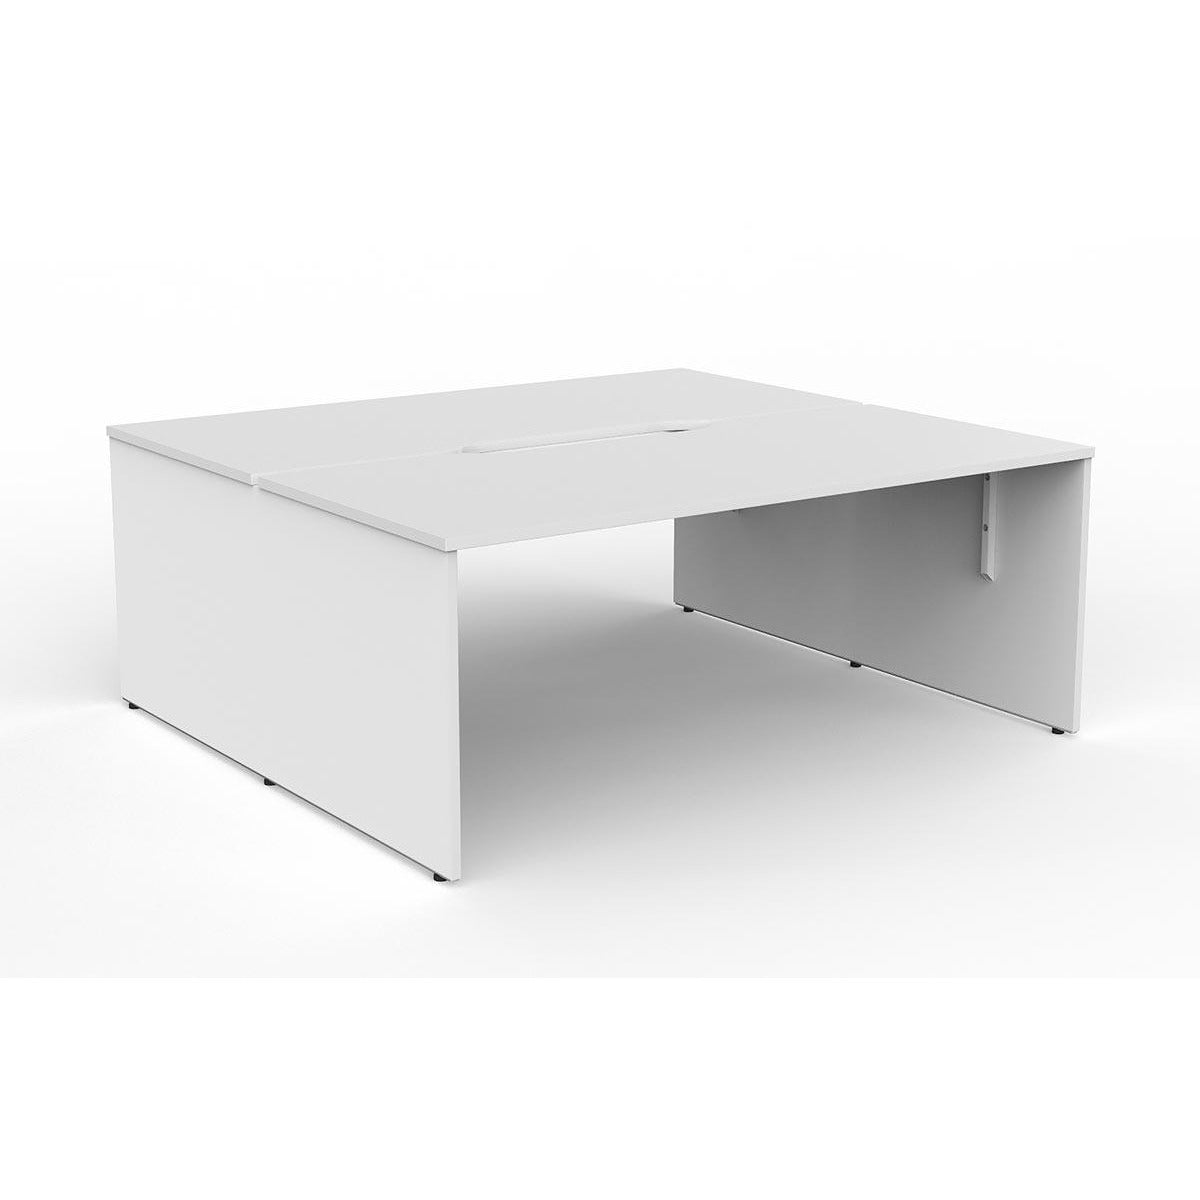 EkoSystem Shared 2 User Workstation - Office Furniture Company 